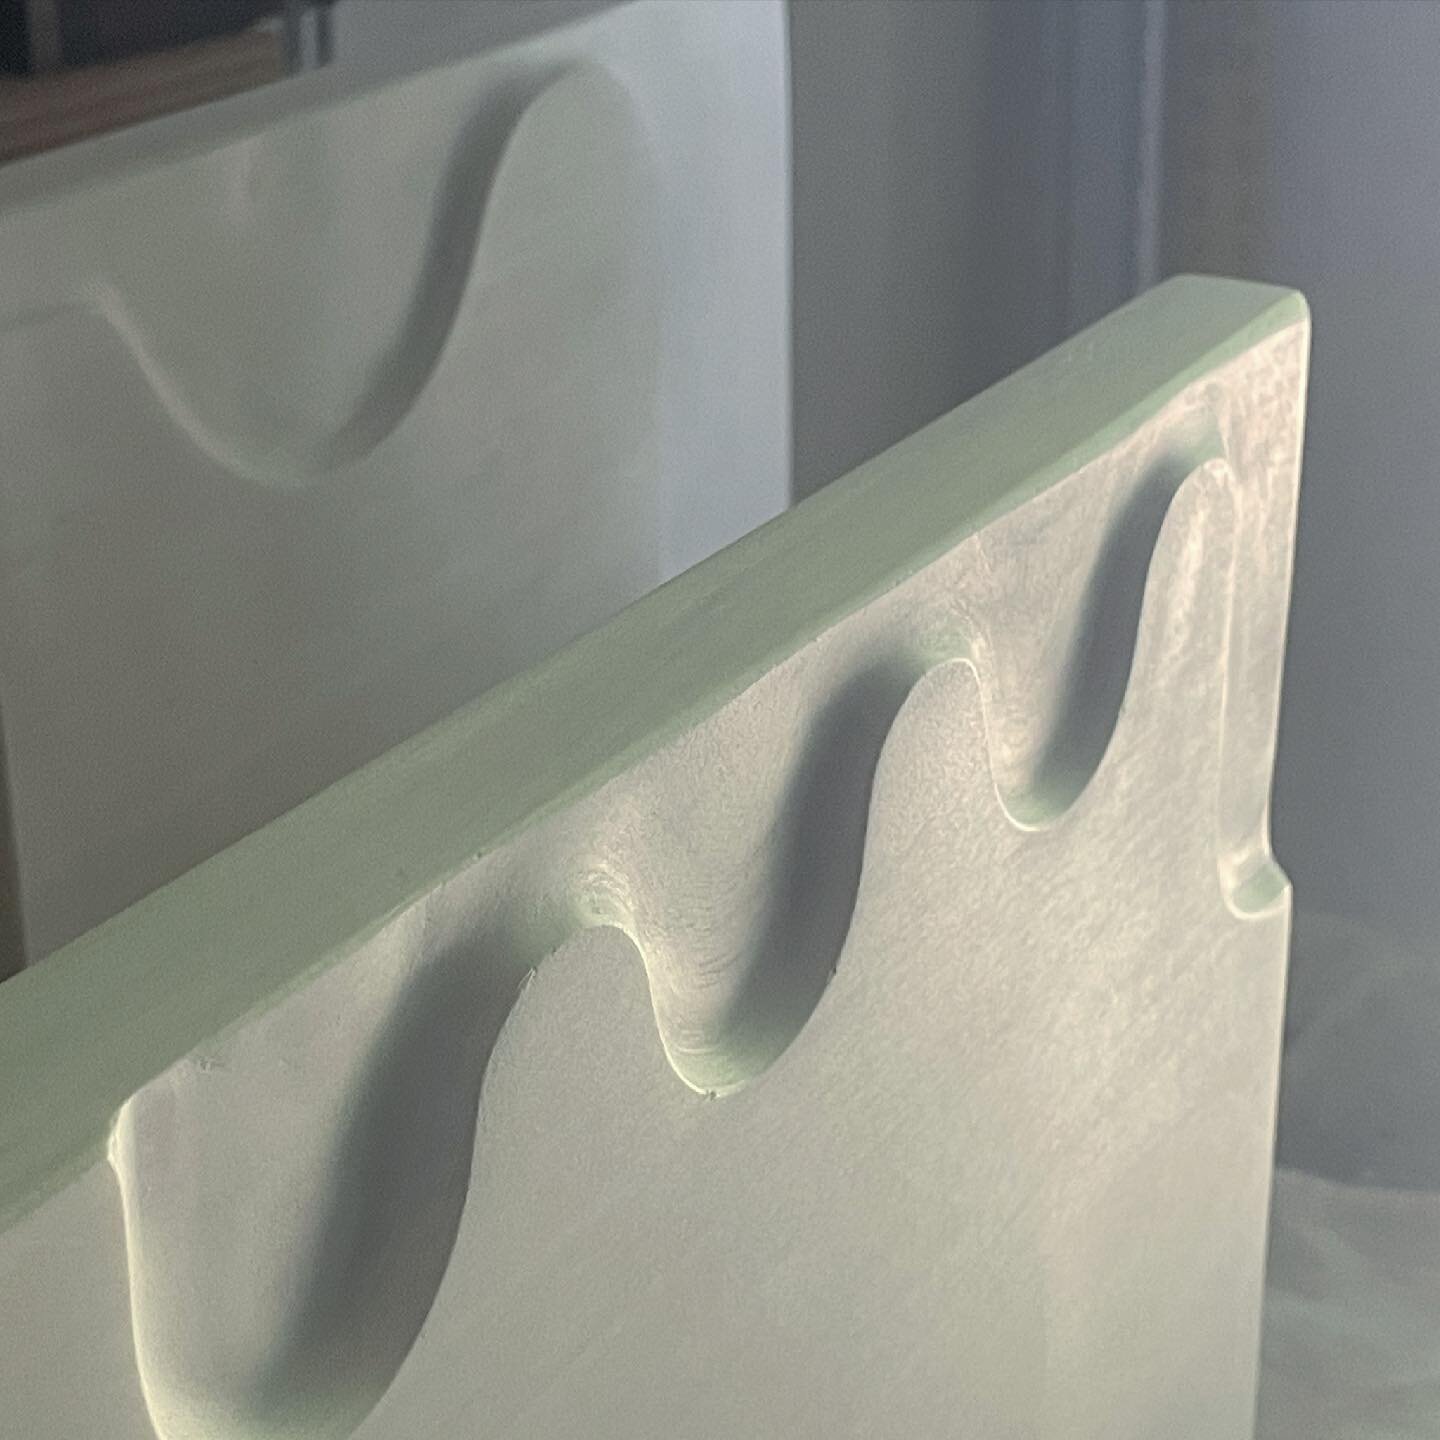 Vega flow. Hand shaped profiles in bleached maple. 
.
.
.
.
.
.
.
.
#bespoke #atelier #mode #mobil #designbuild #custom #customfurniture #collectablefurniture #contemporarydesign #interiordesign #atlantainteriordesign #interiordesign #nature #reveren